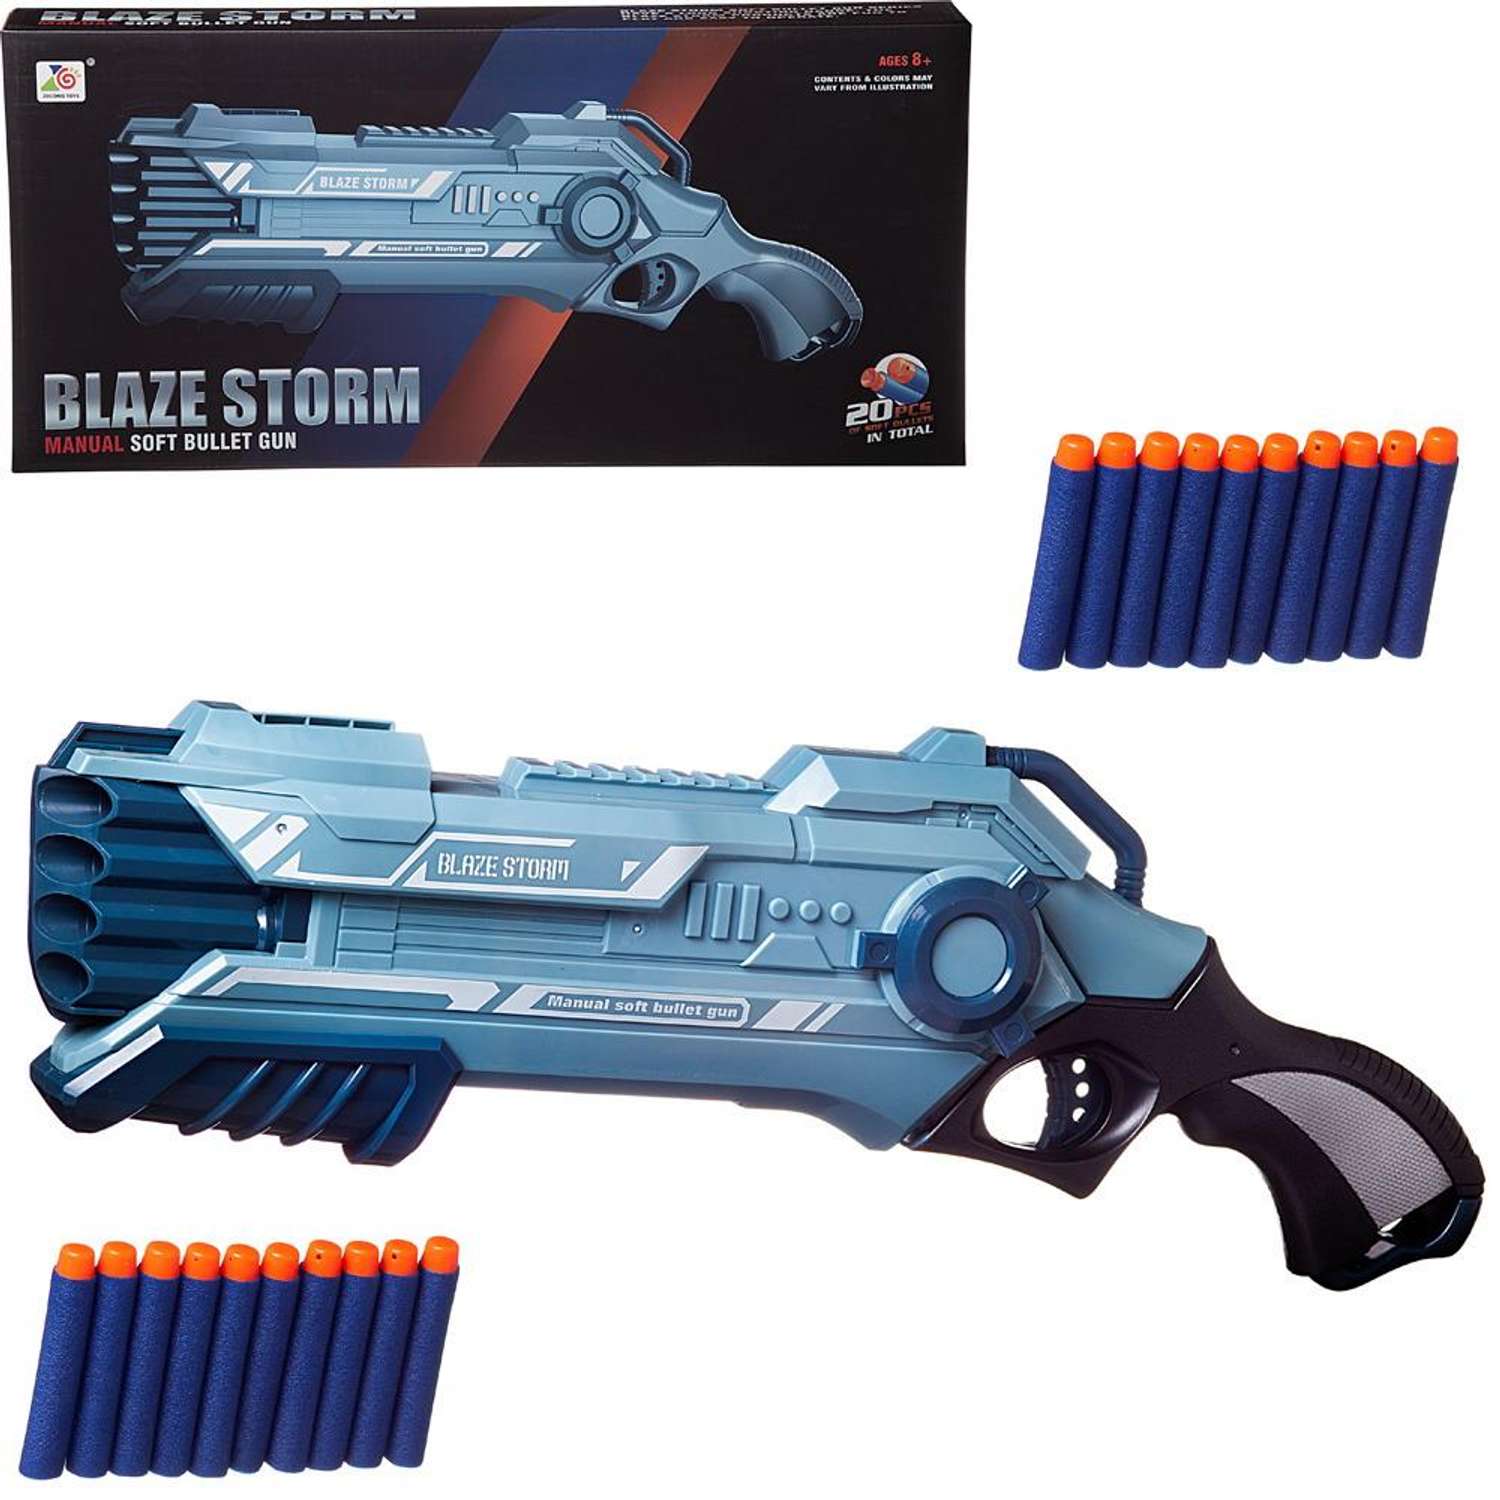 Бластер Blaze Storm Junfa серо голубой с 20 мягкими пулями - фото 2